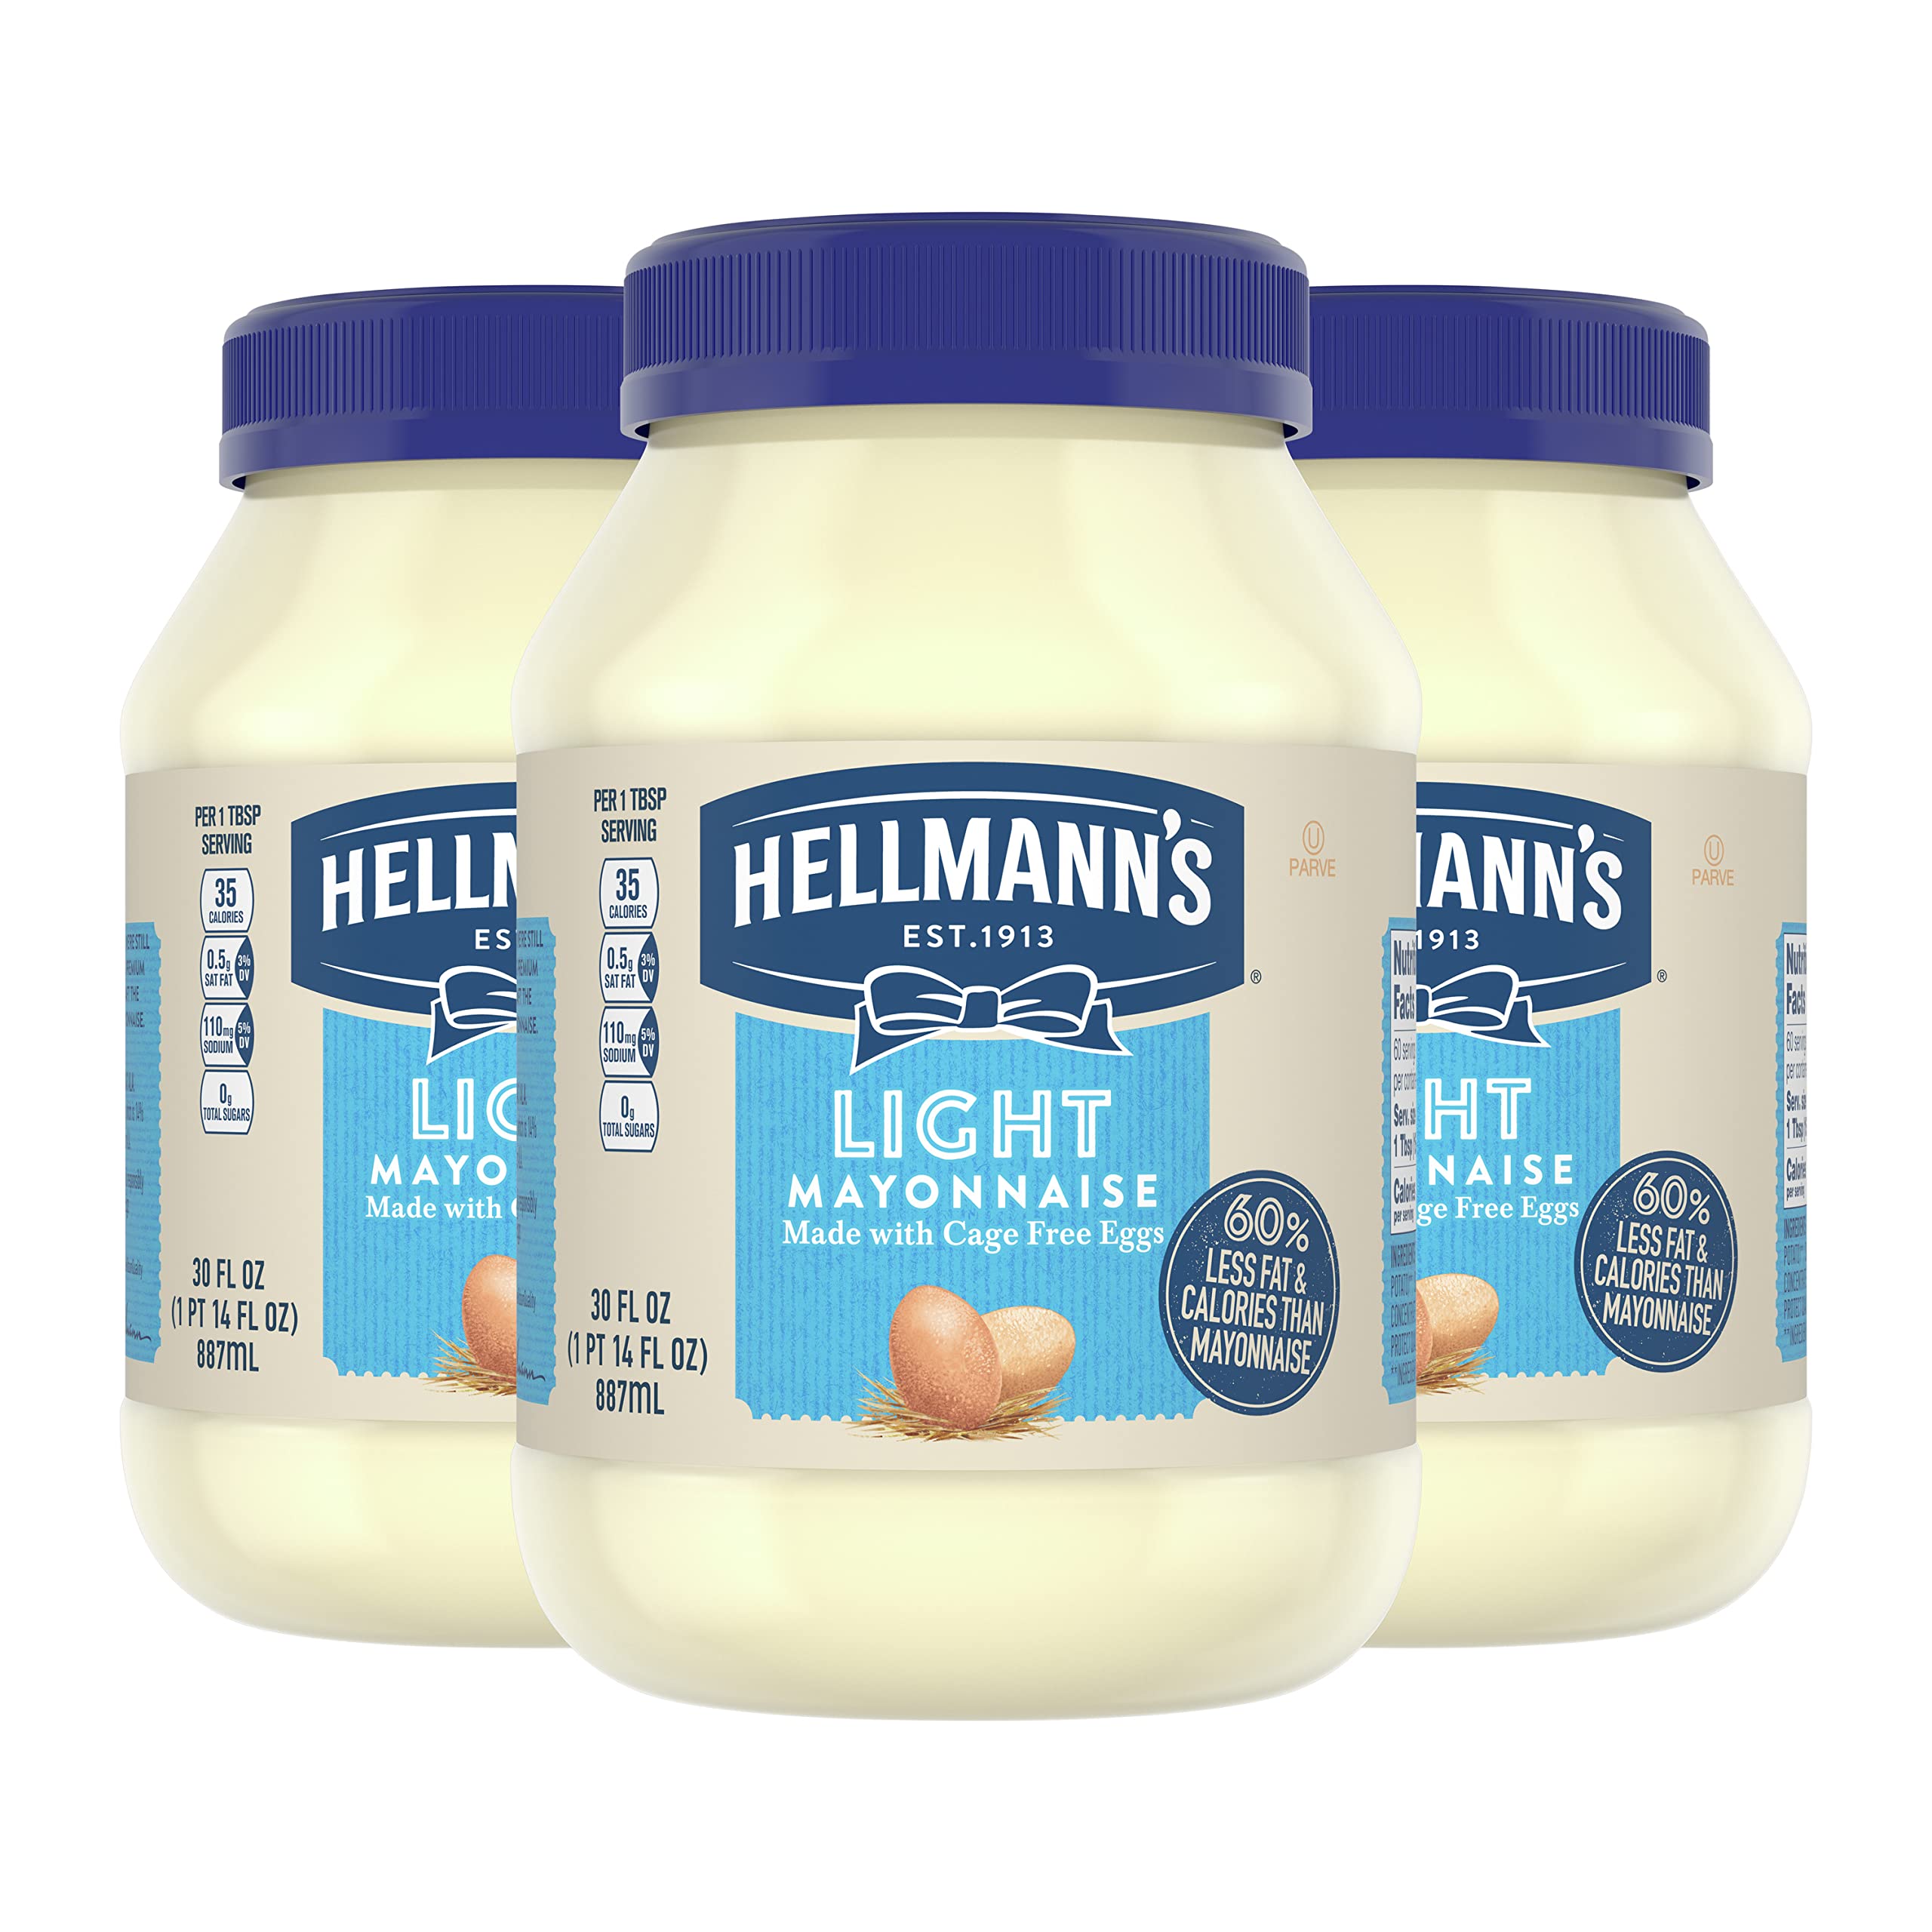 $8.67 w/ S&S: Hellmann's Light Mayonnaise Light Mayo, 30 oz, 3 Count